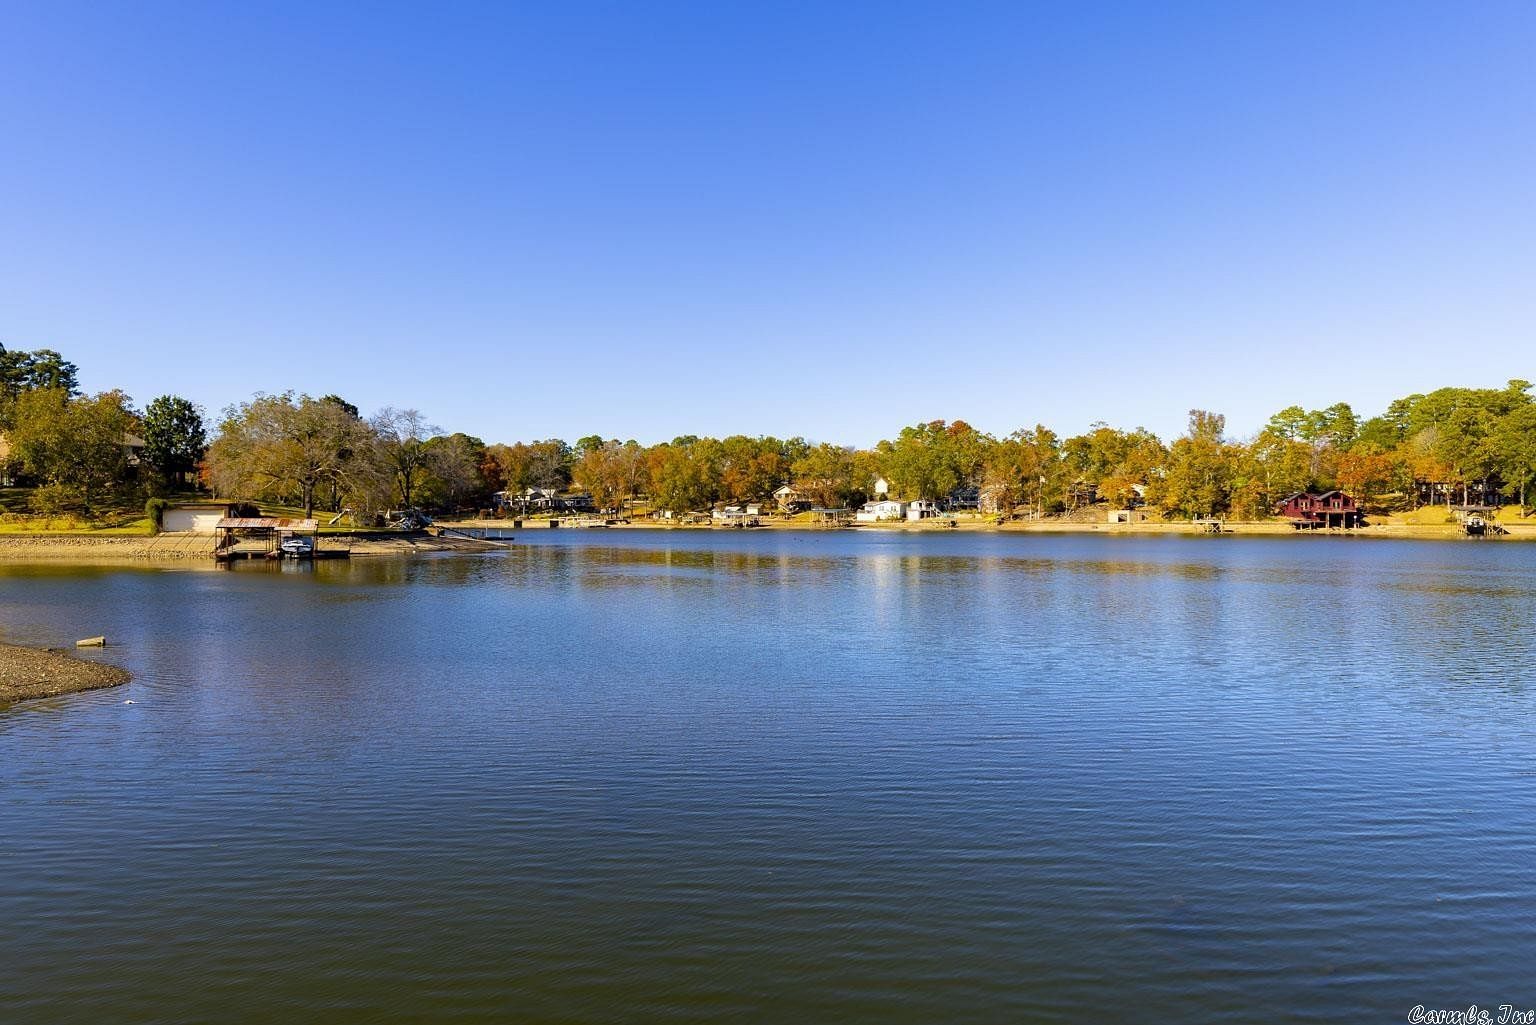 0.4 Acres of Residential Land for Sale in Hot Springs, Arkansas